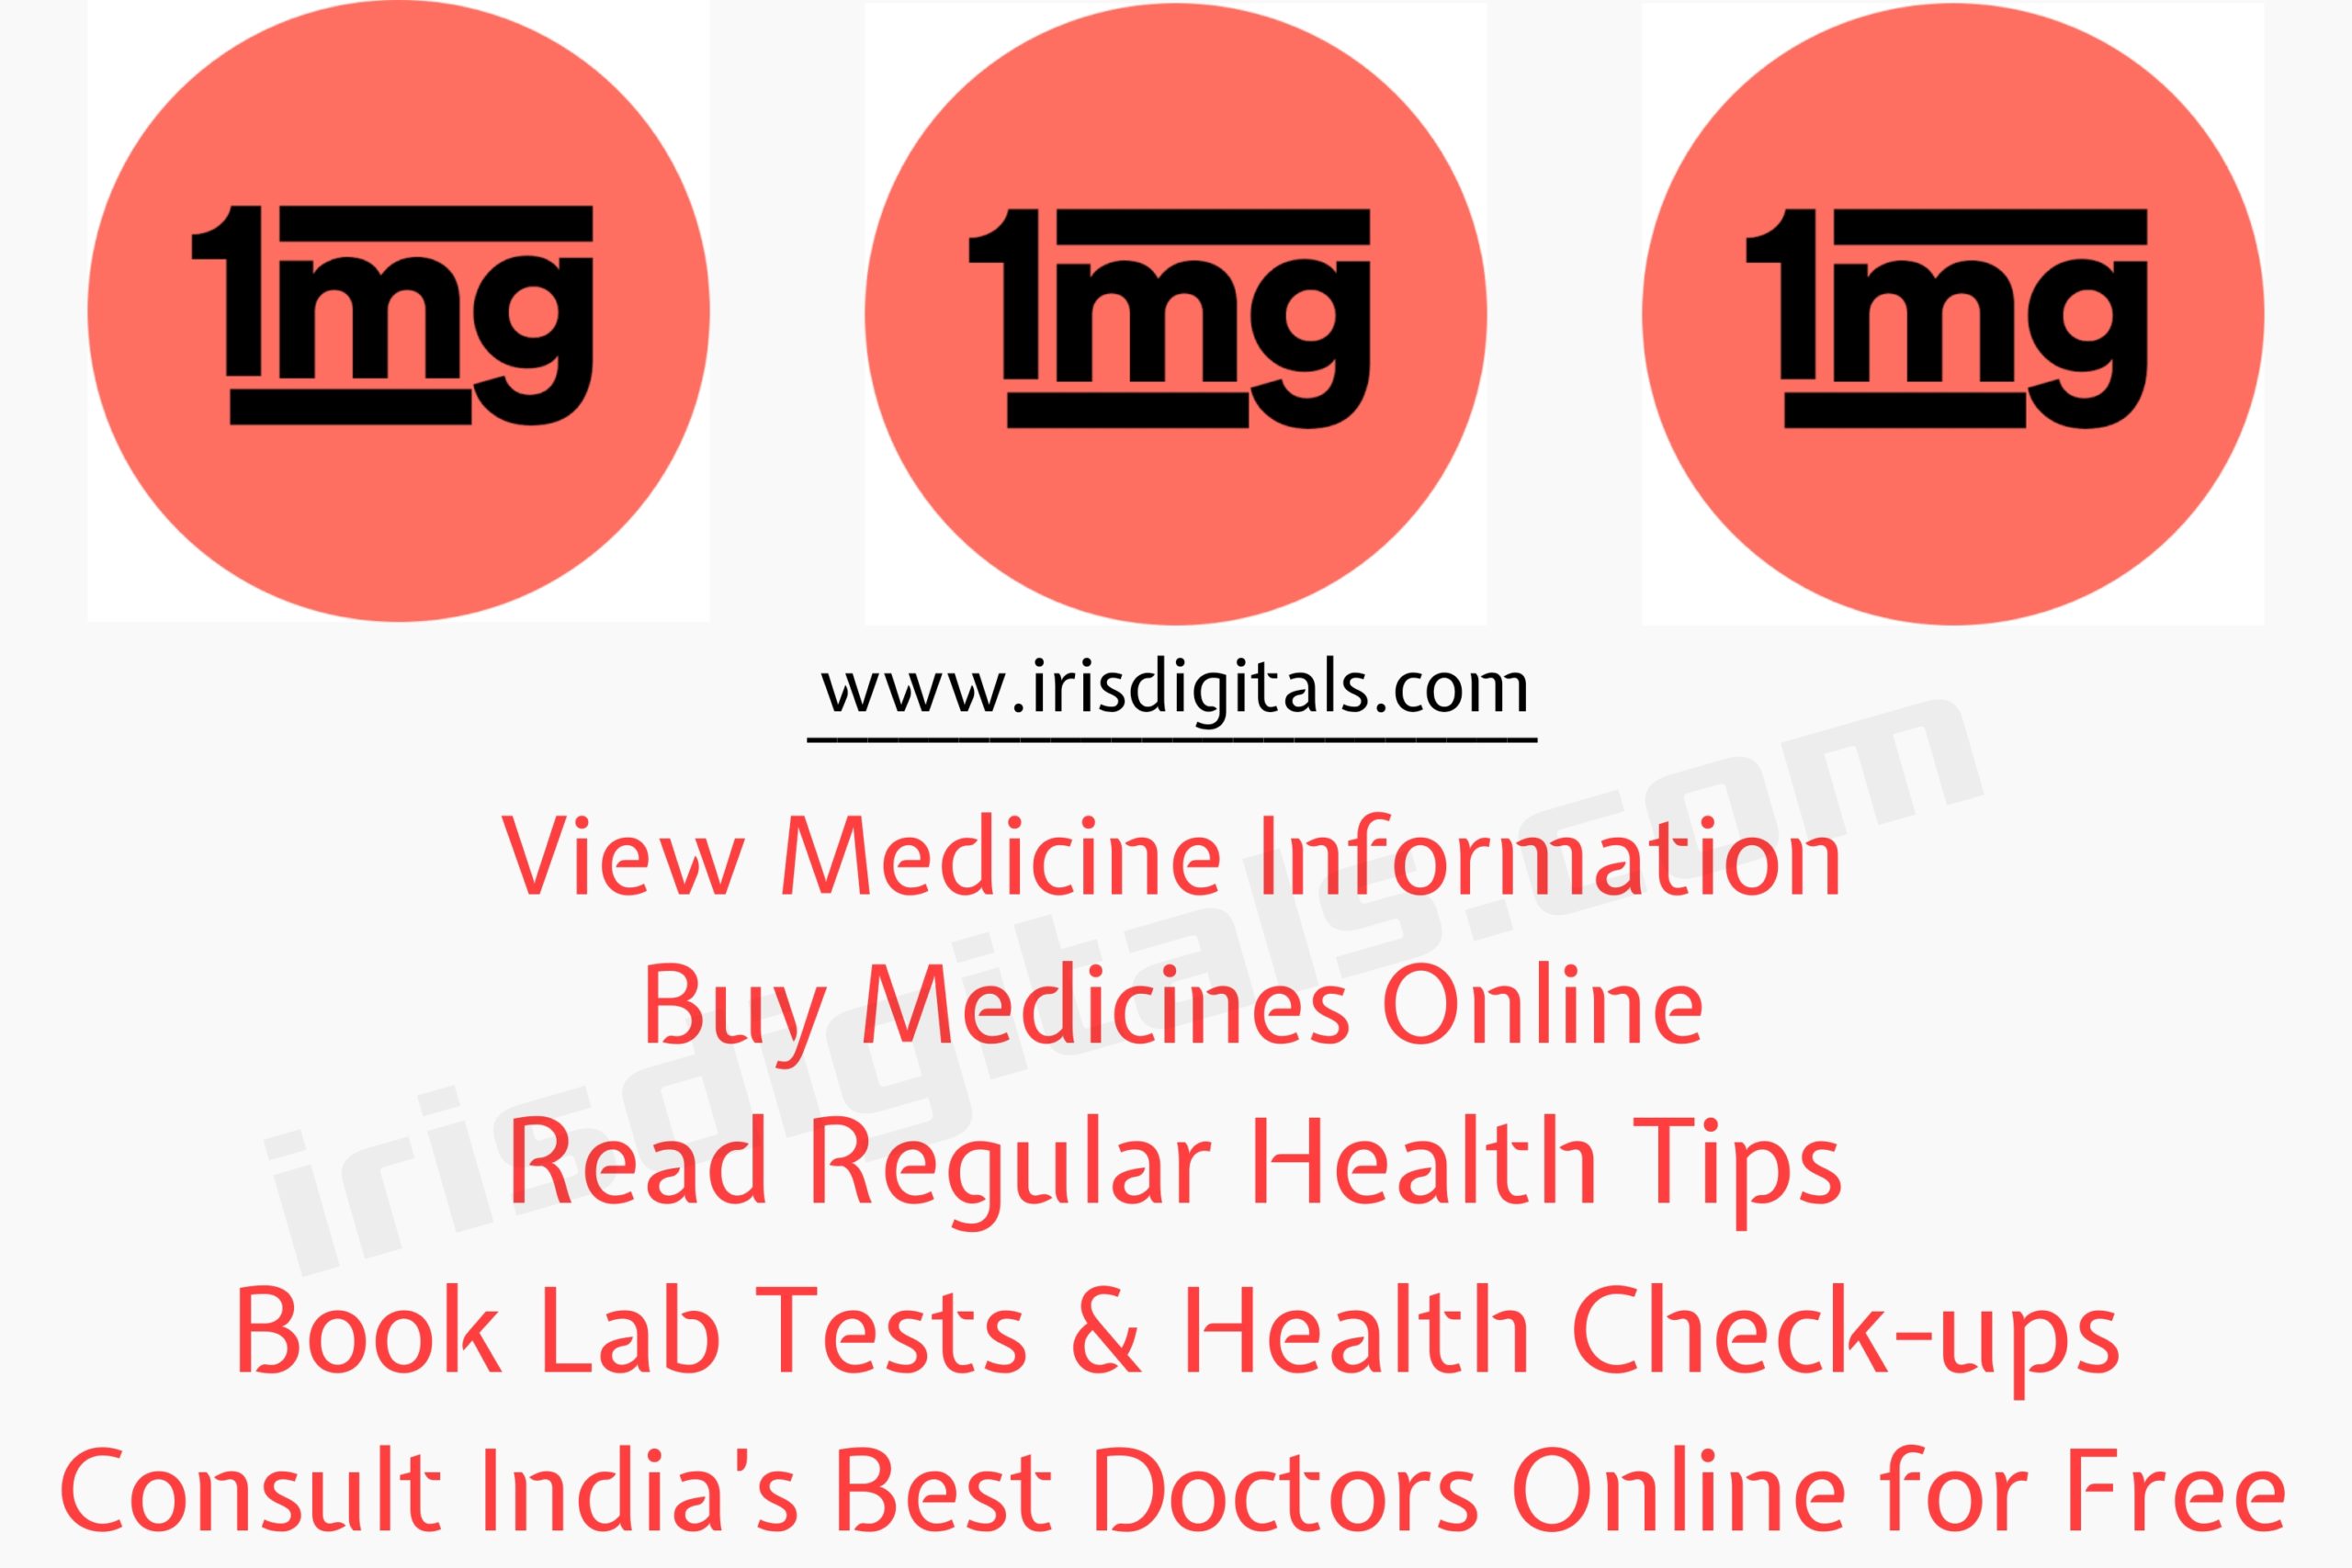 1mg Best Health App